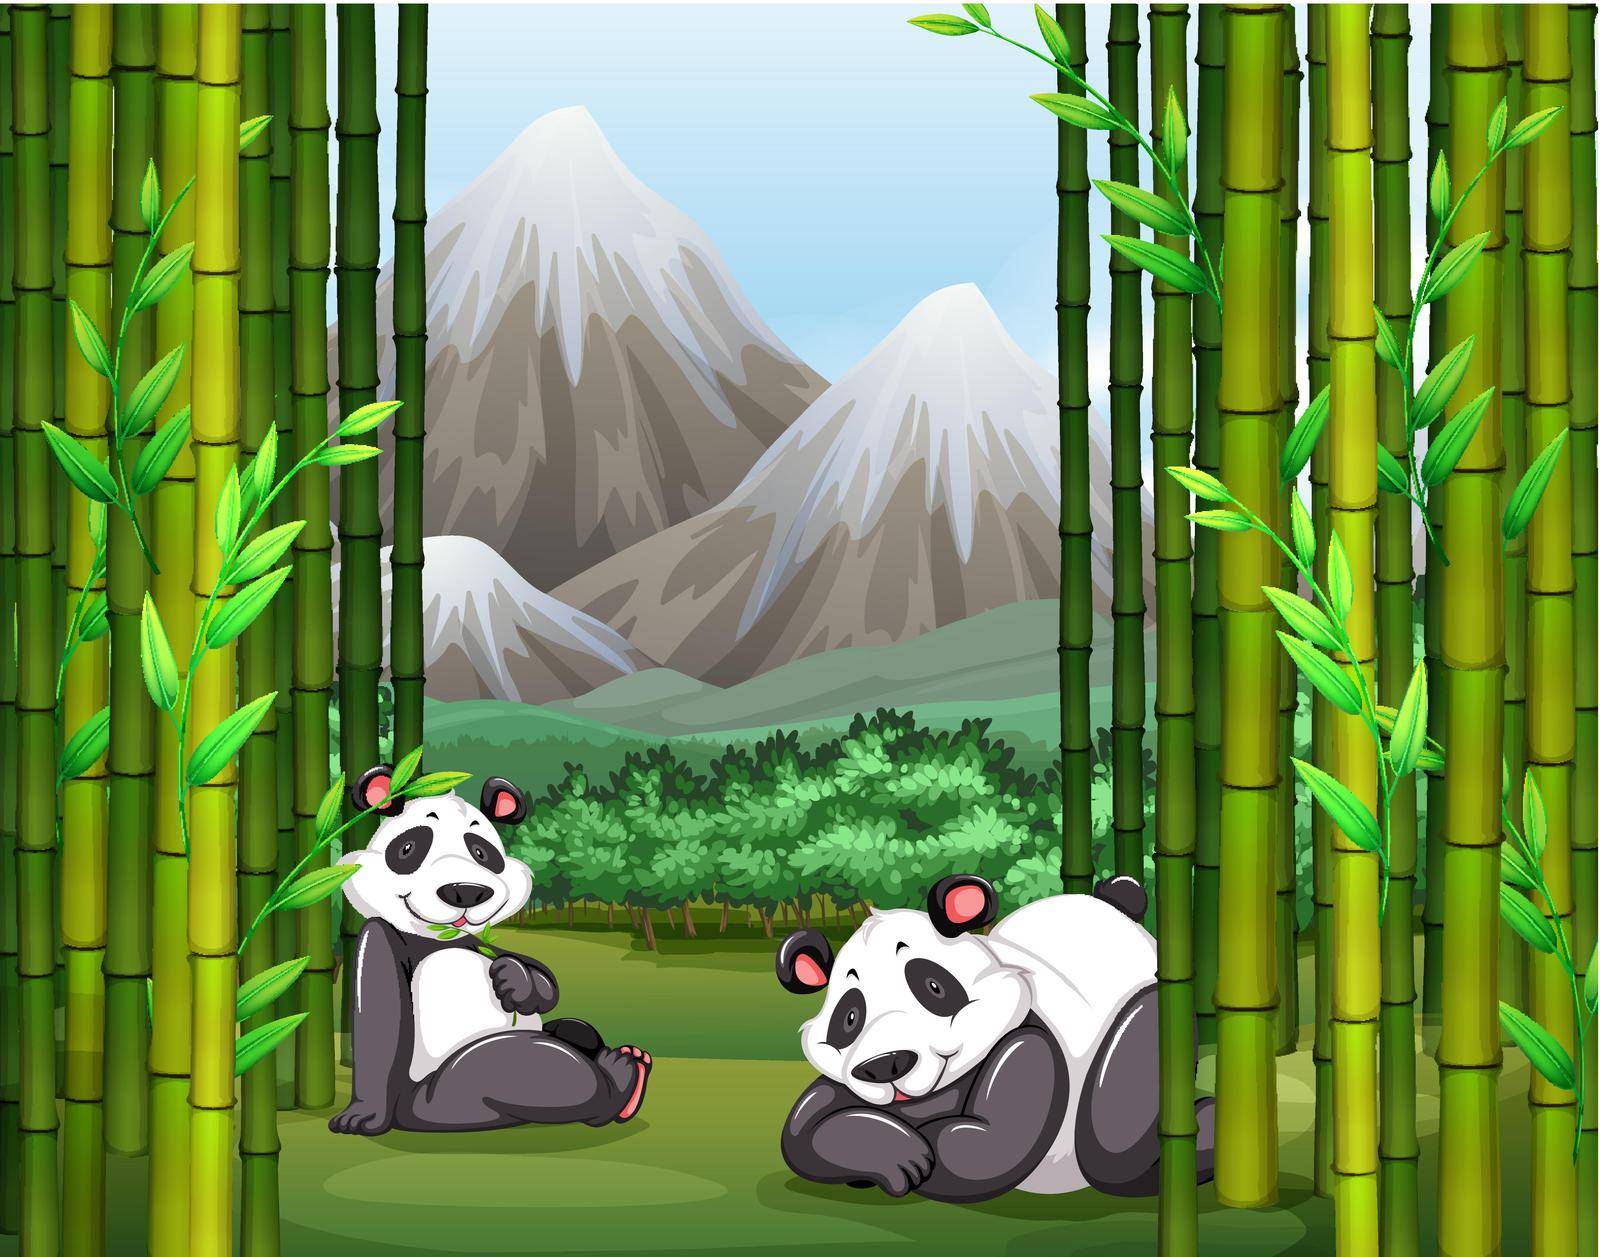 Two panda resting near bamboo trees